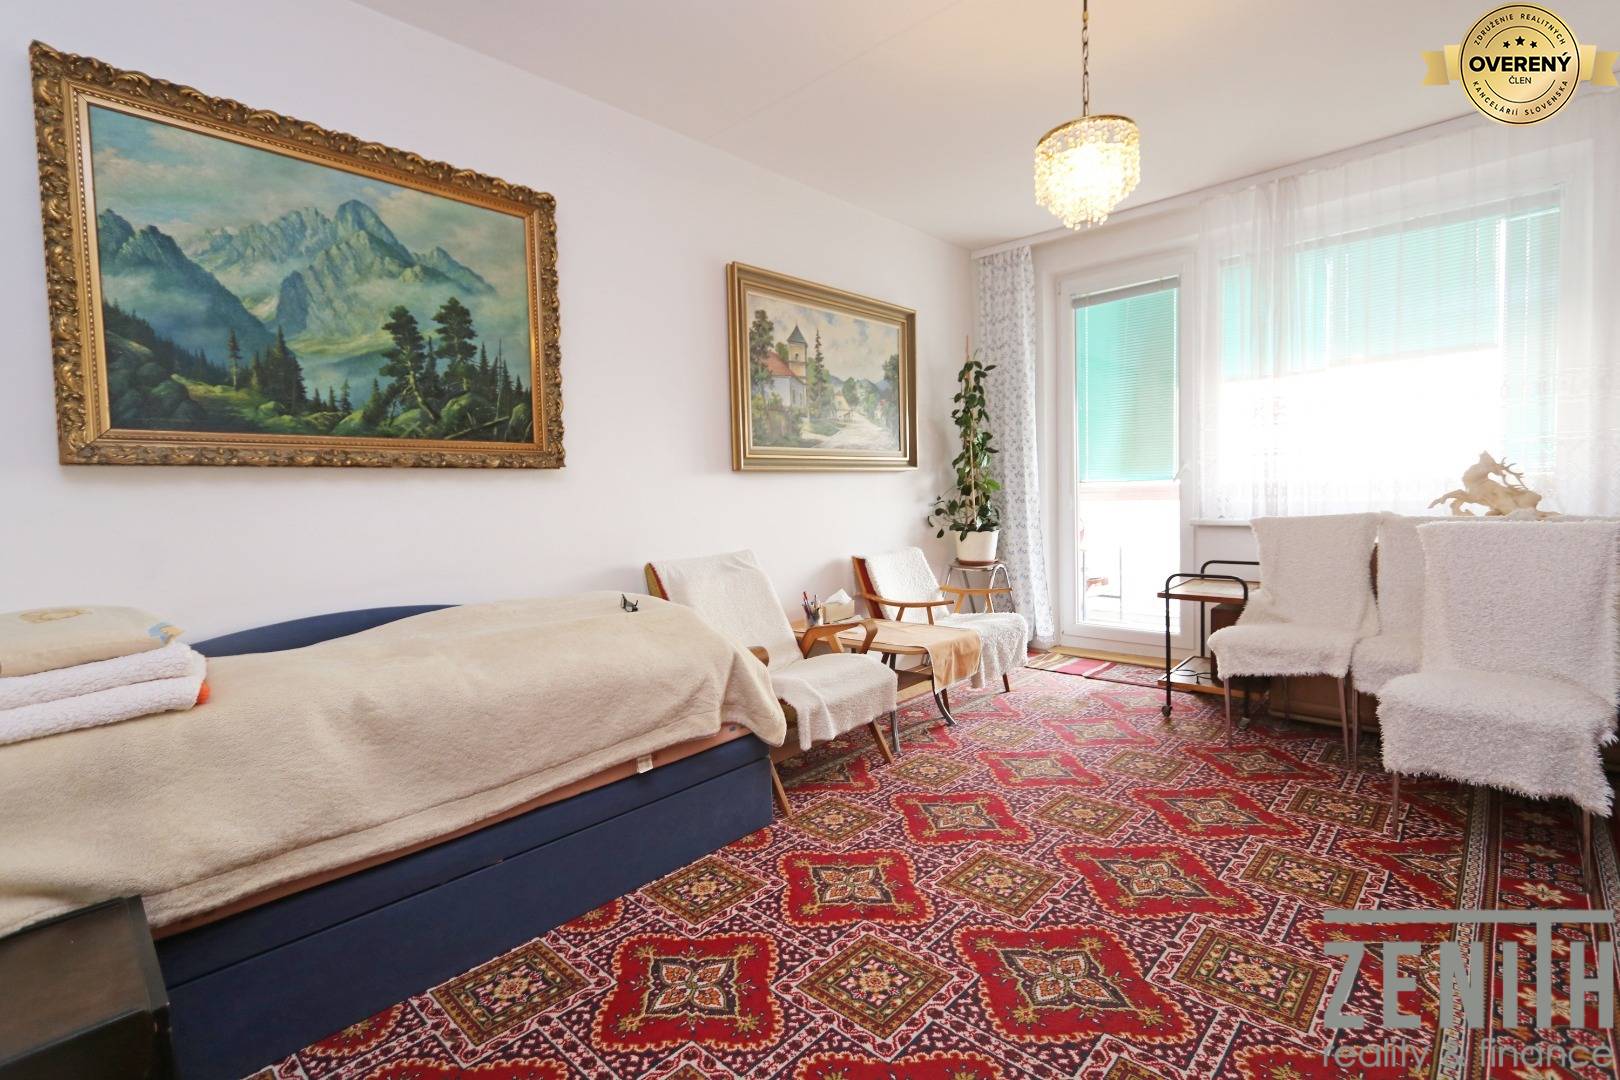 Sale Two bedroom apartment, Ladislava Dérera, Bratislava - Nové Mesto,